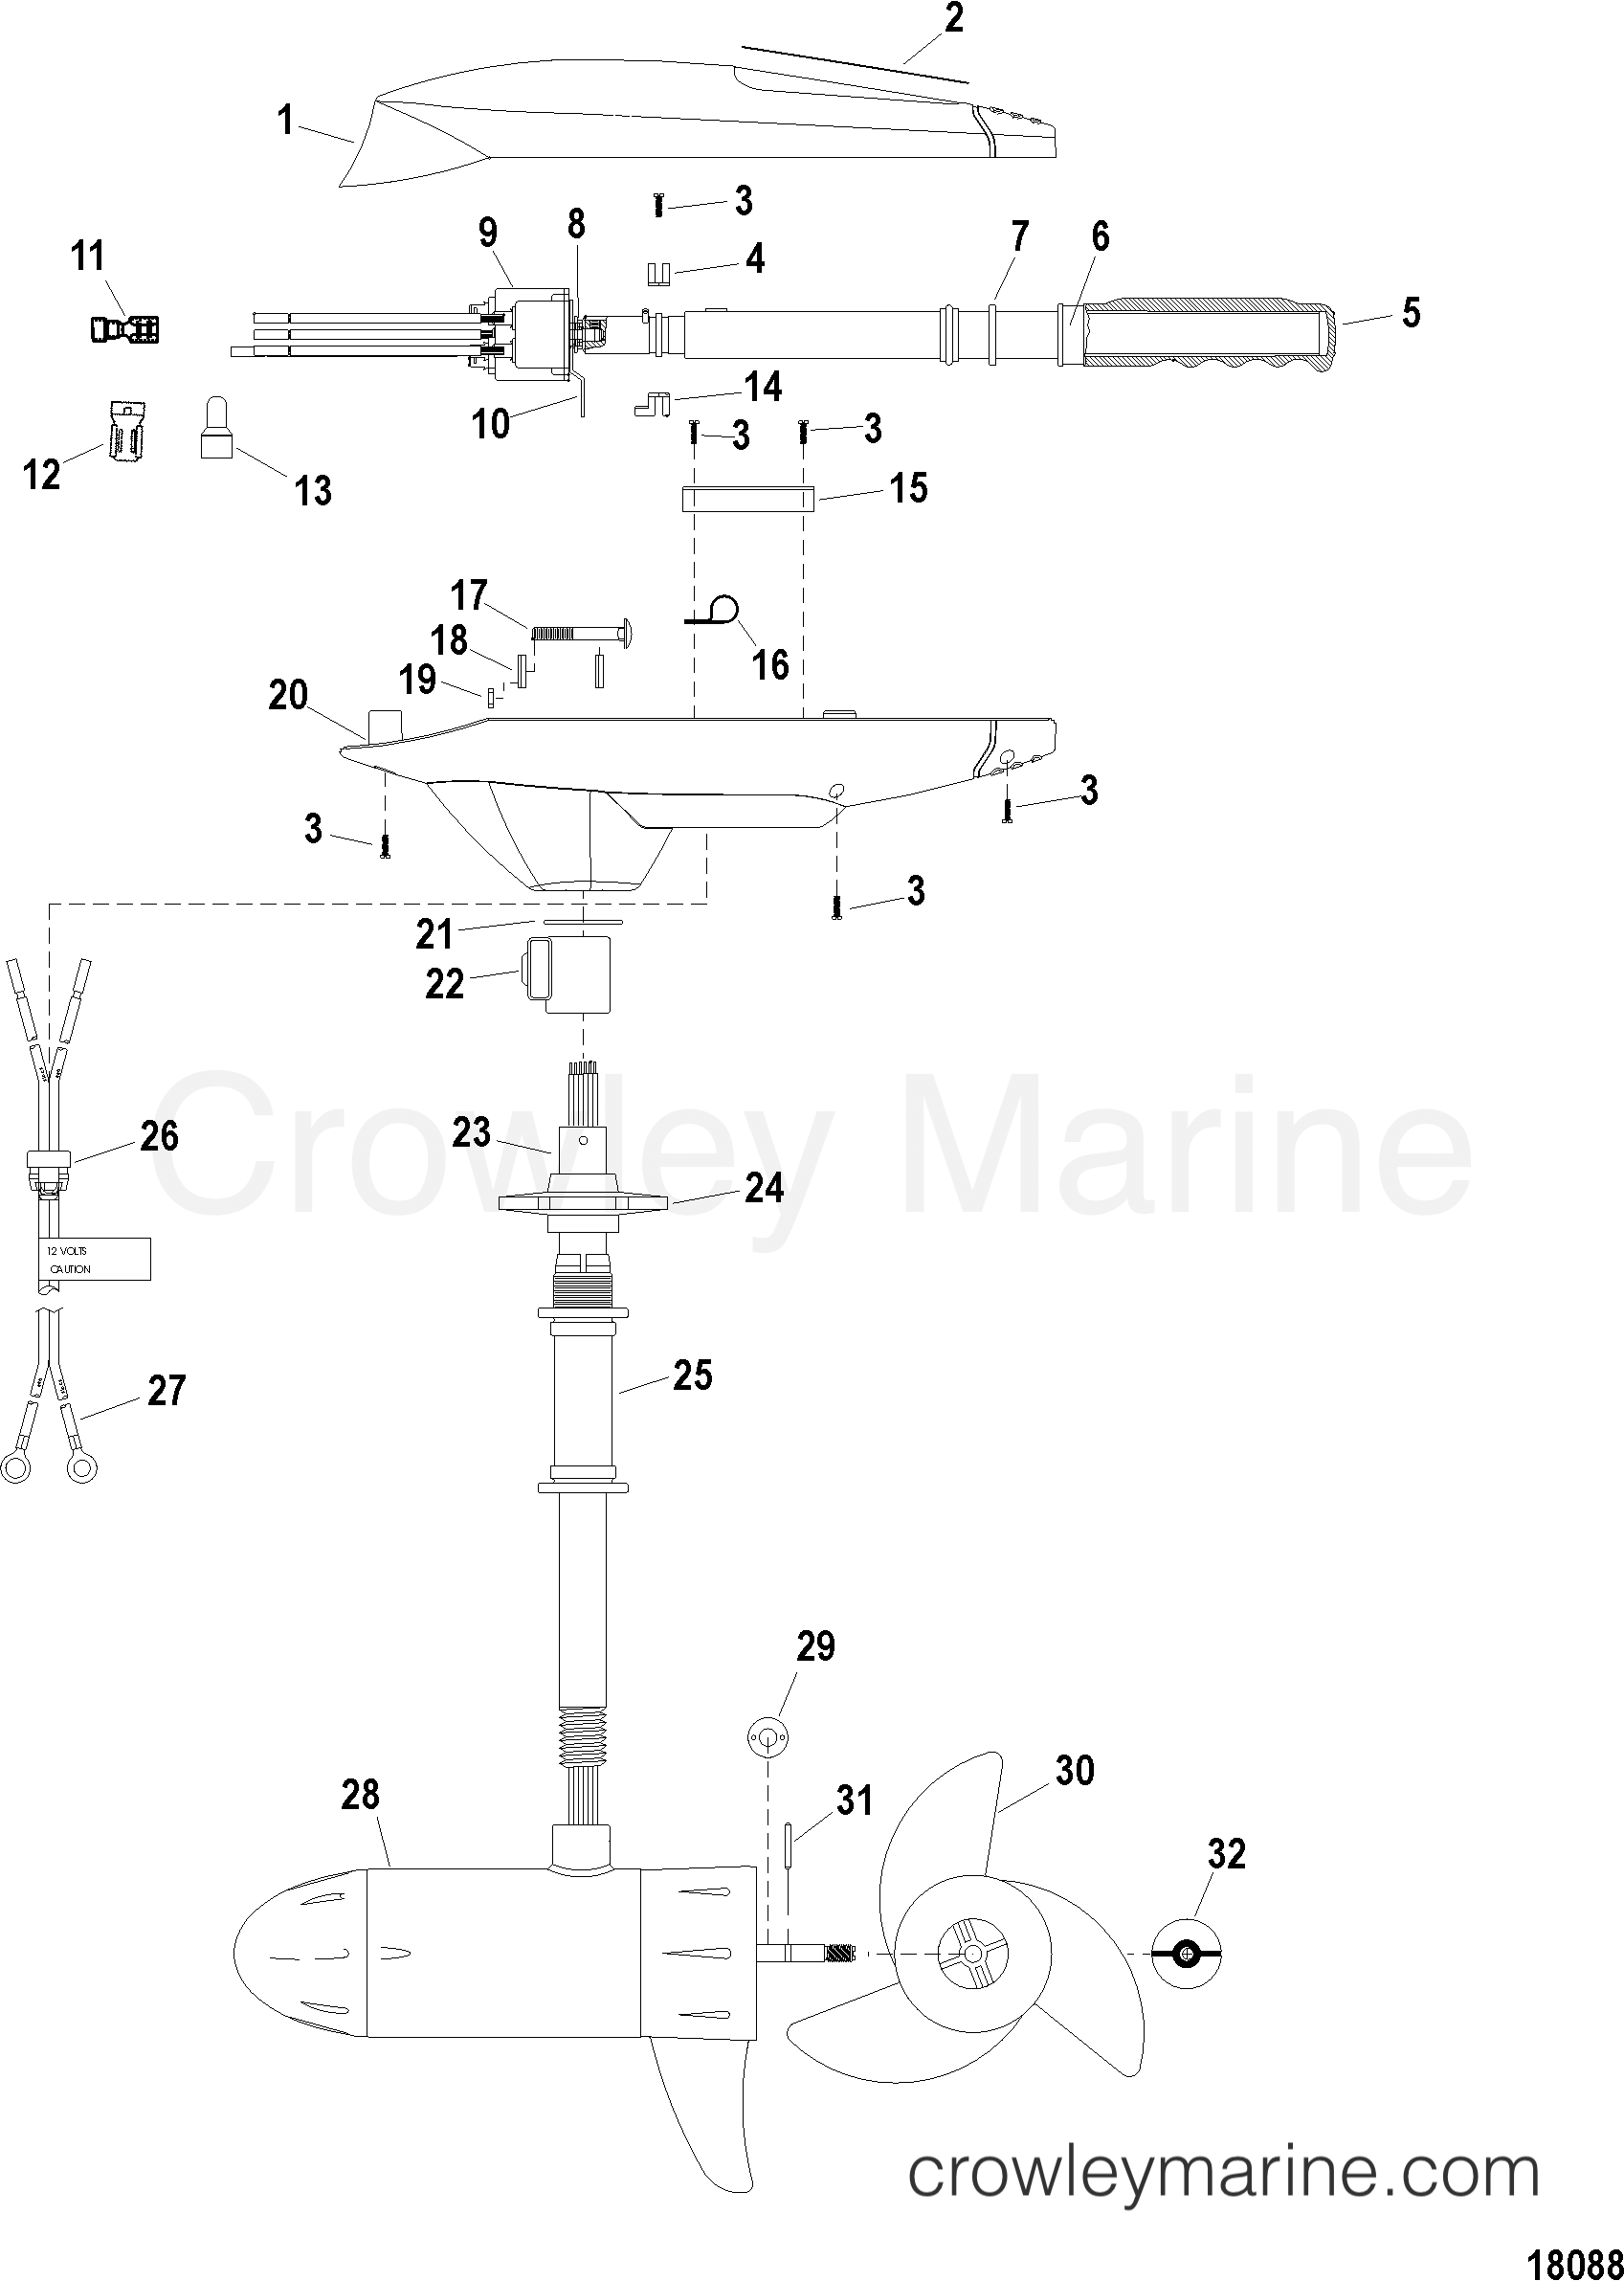 motorguide xi5 parts diagram